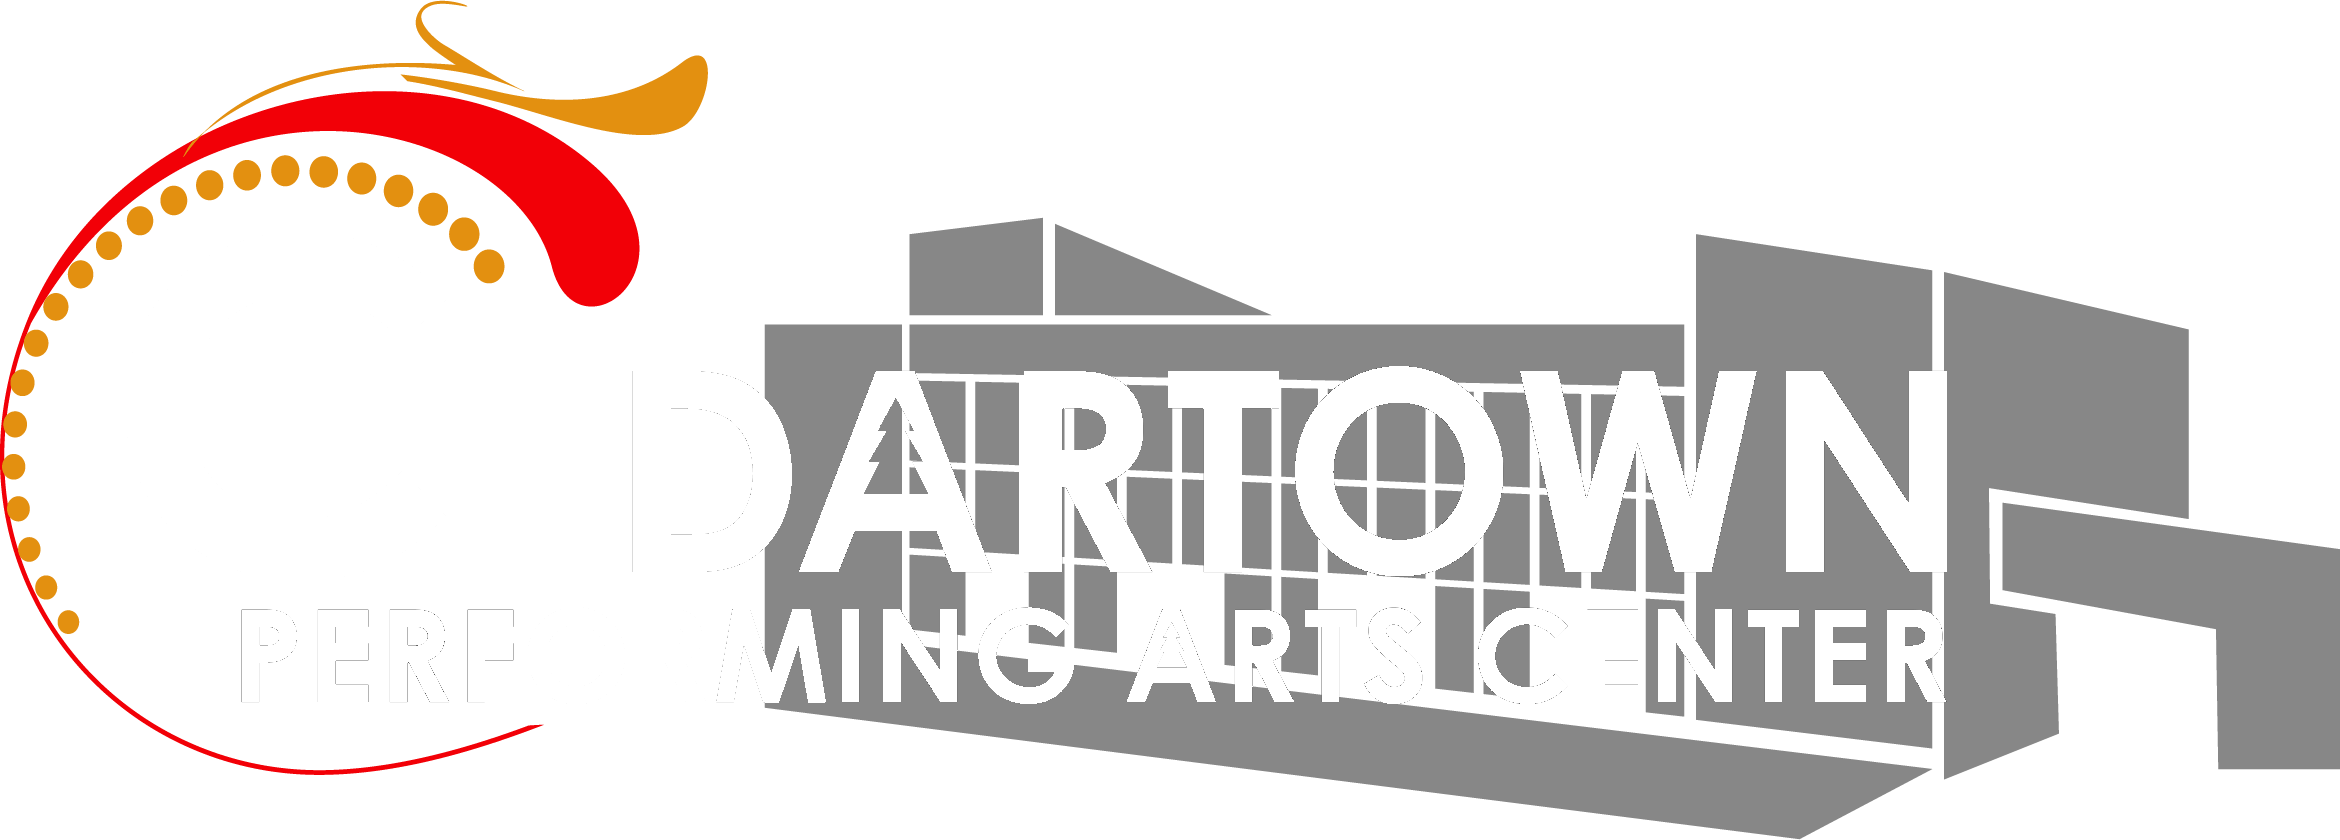 Cedartown Performing Arts Center